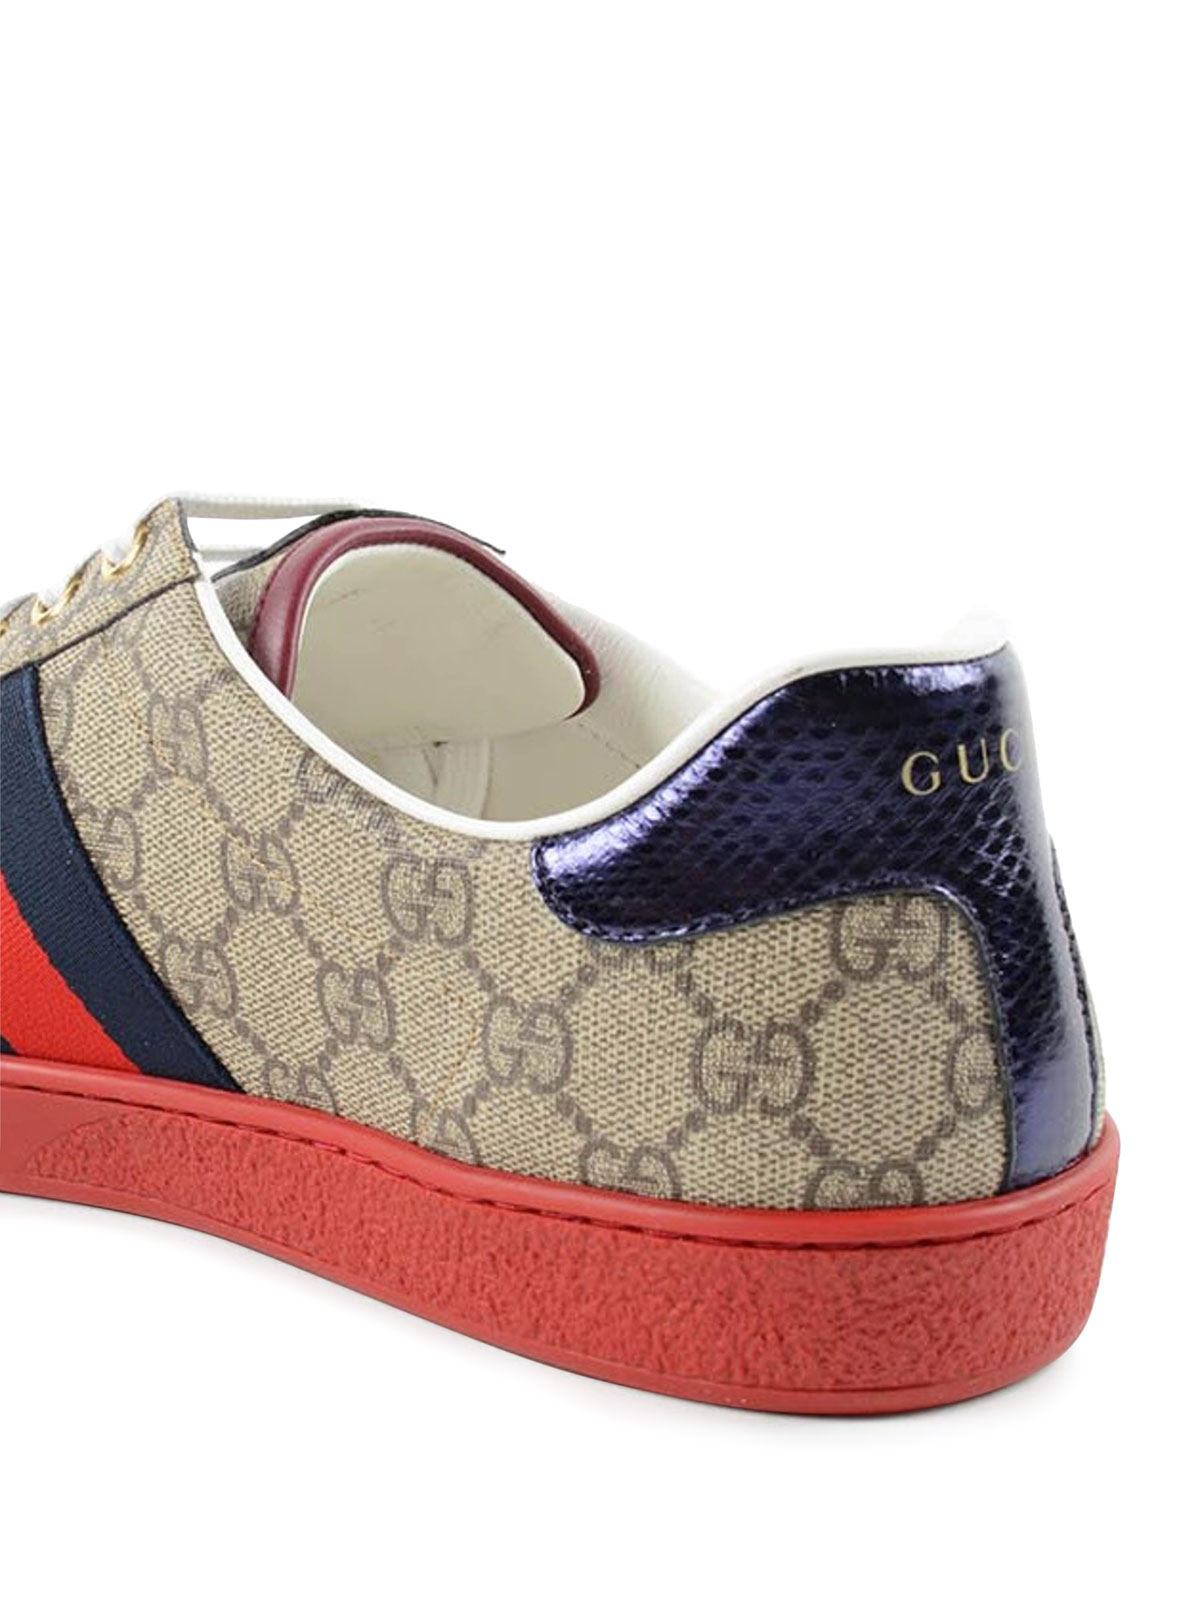 Gucci - GG Supreme sneakers - trainers - 429445/K2LH0 9767 | www.semadata.org